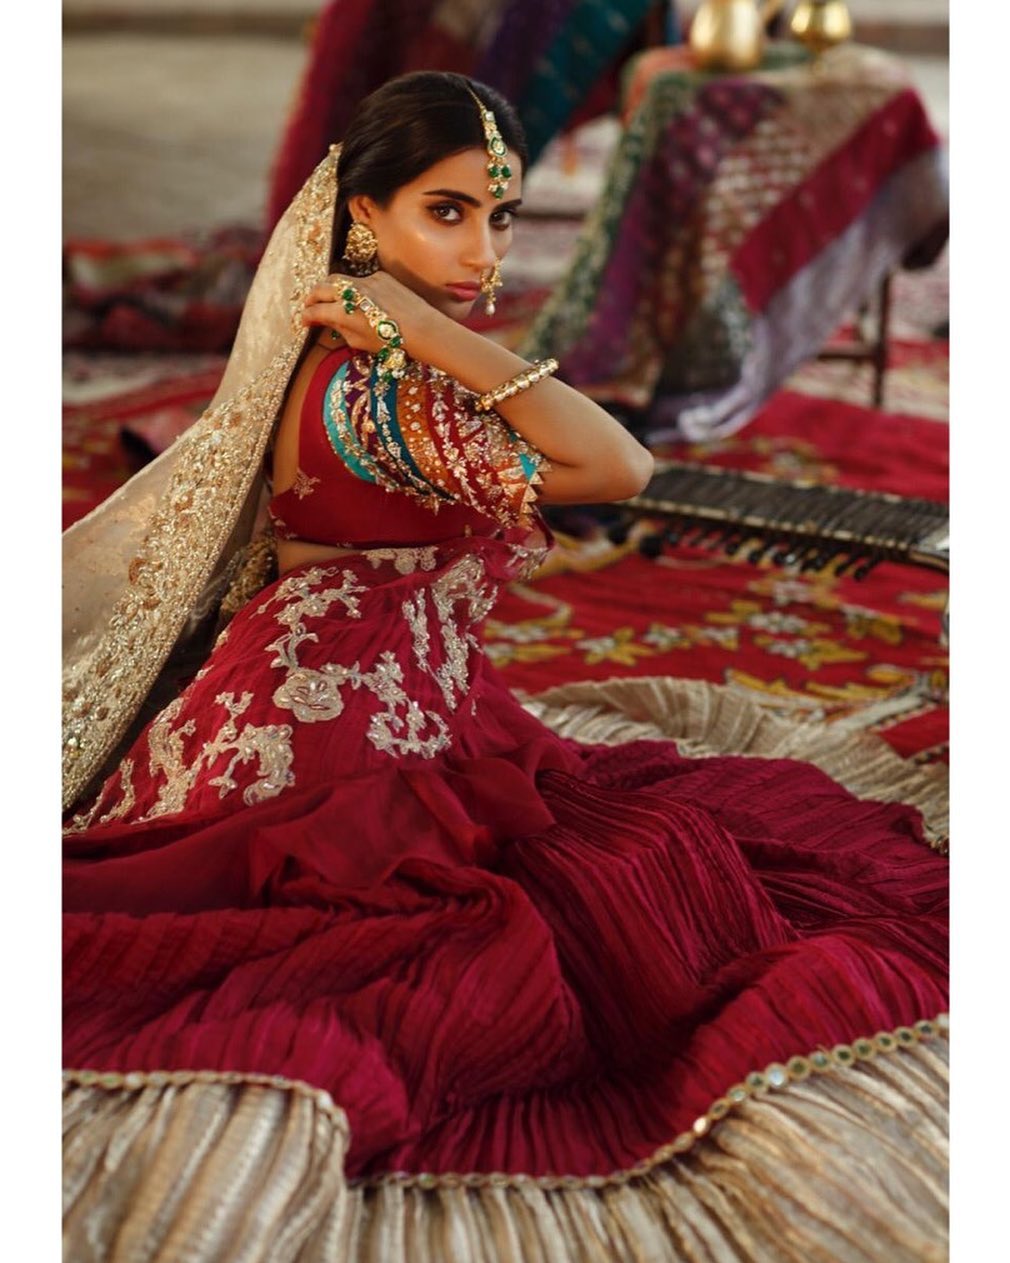 Saboor Ali's Latest Bridal Photo Shoot for Zainab Salman